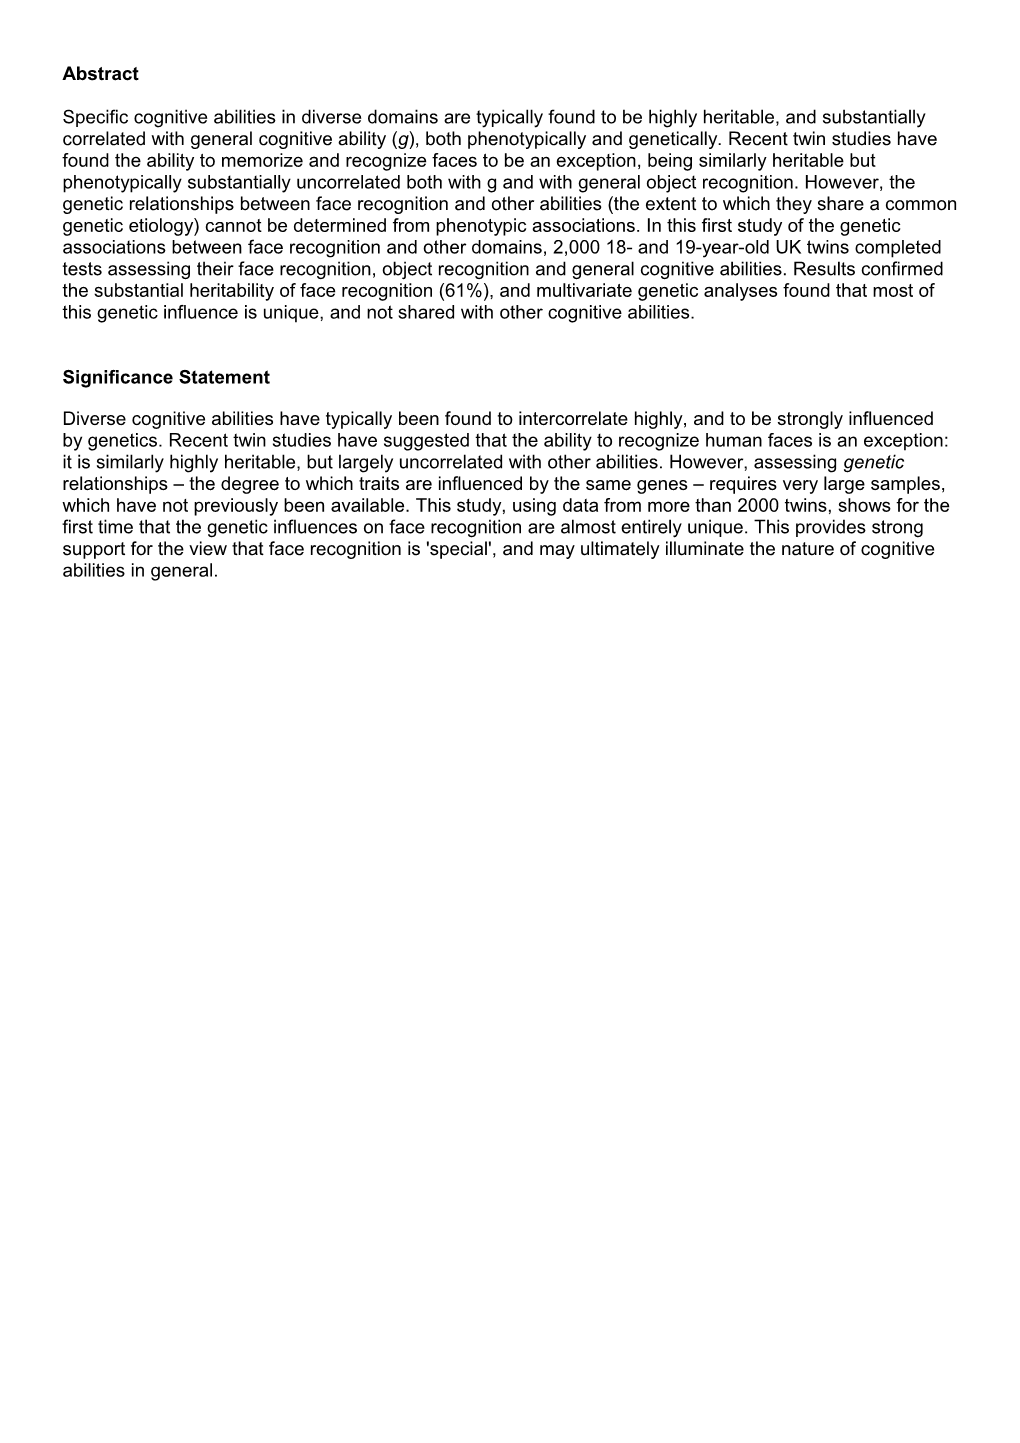 Classification: Biological Sciences: Psychological and Cognitive Sciences